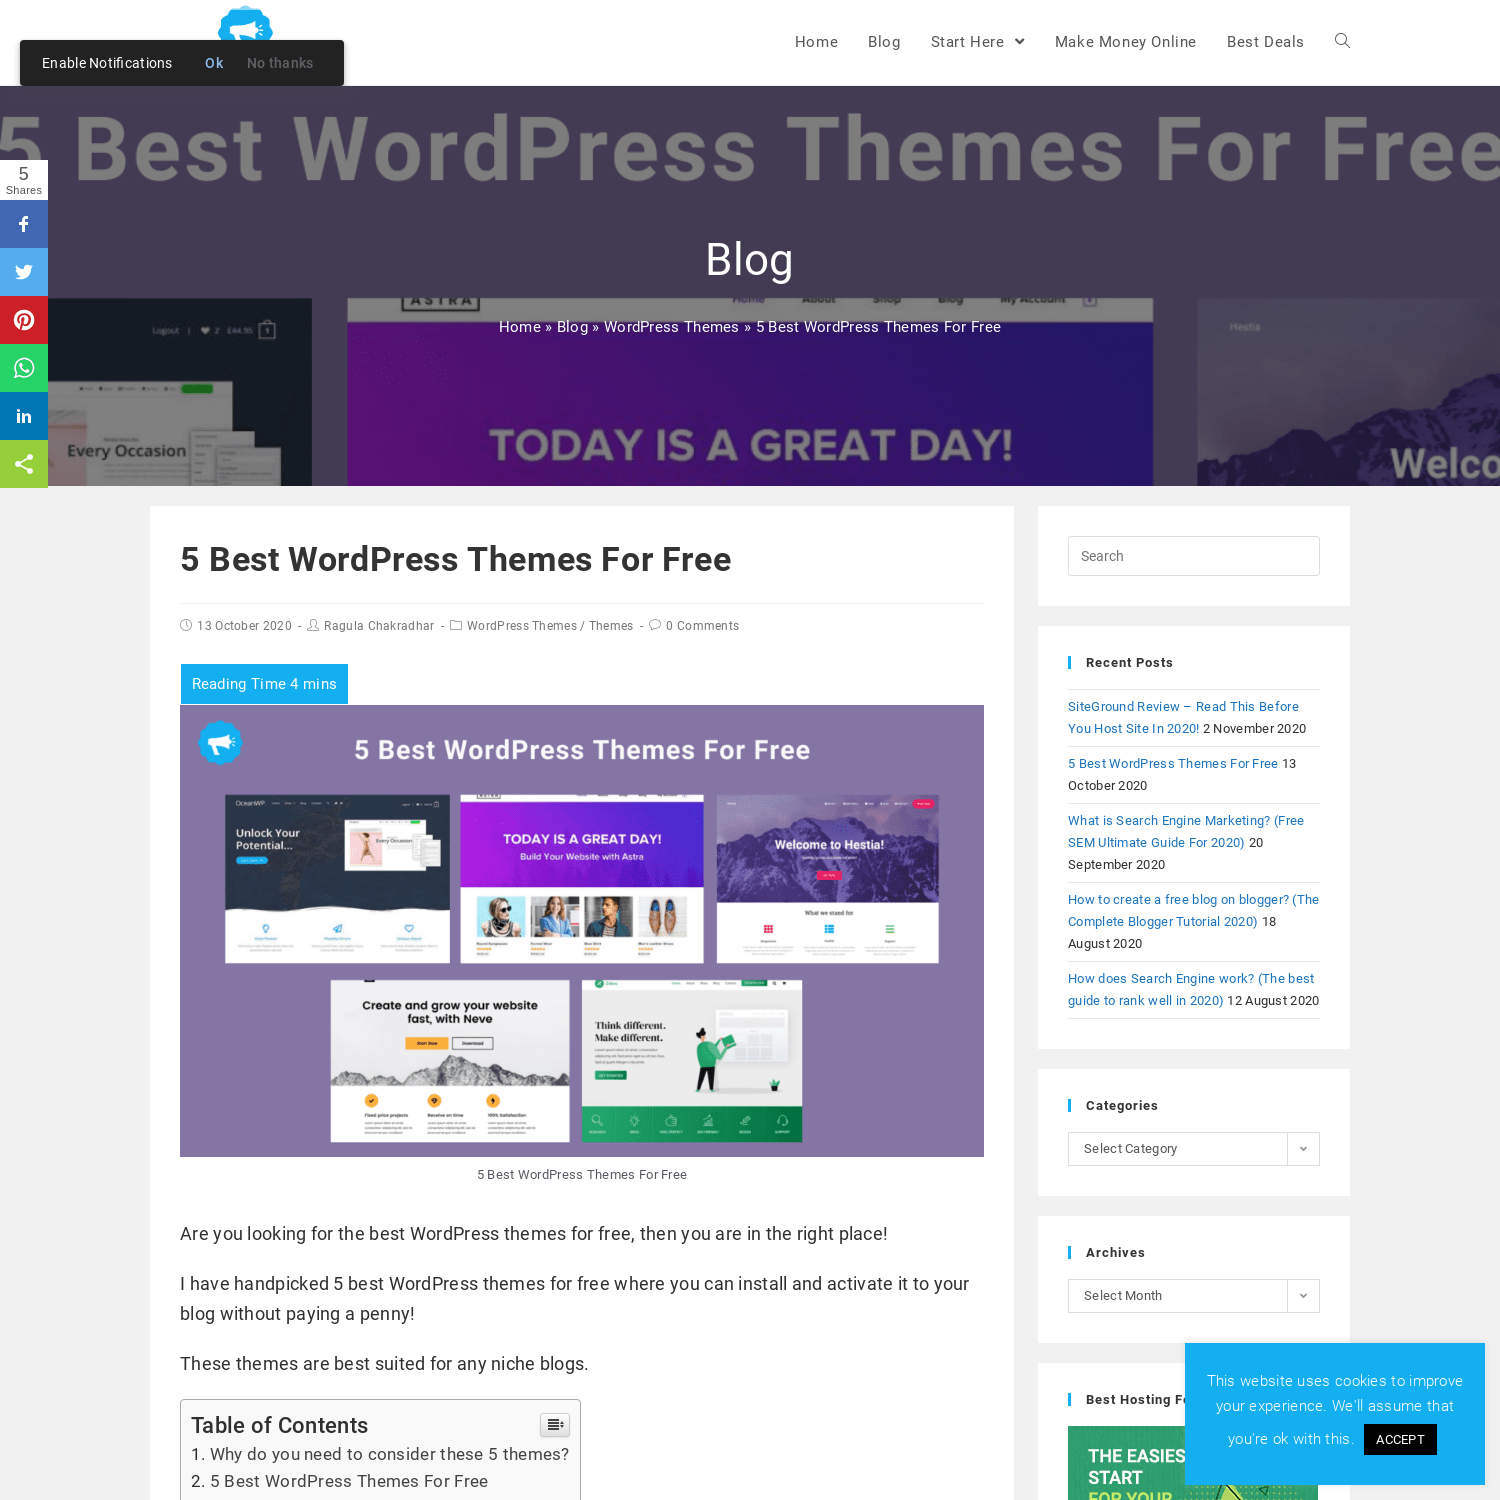 5 Best WordPress Themes For Free - Know Internet Marketing